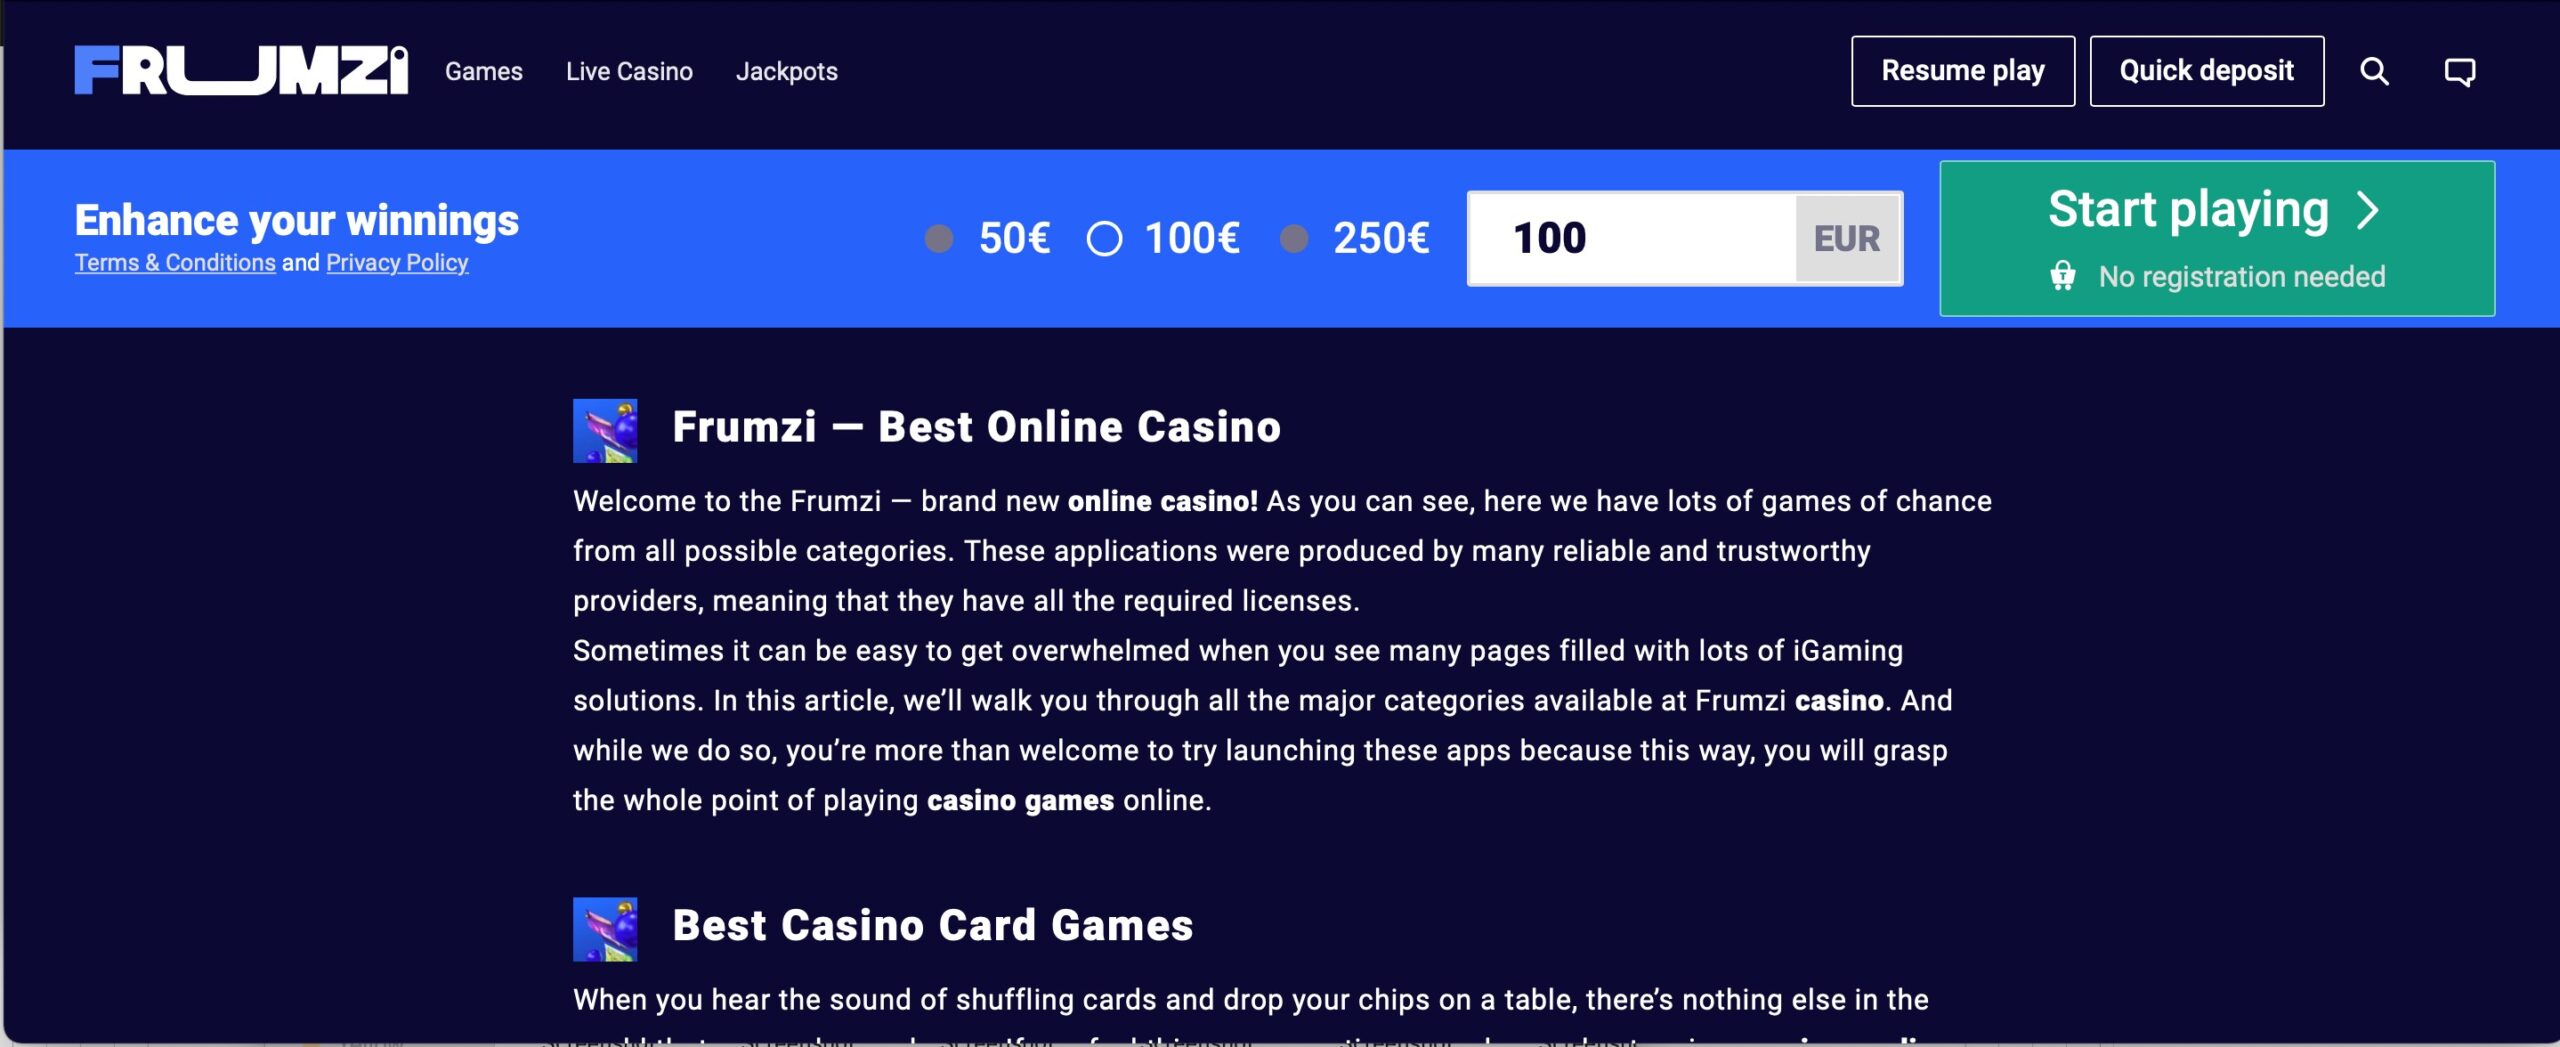 Frumzi Casino Pay and Play